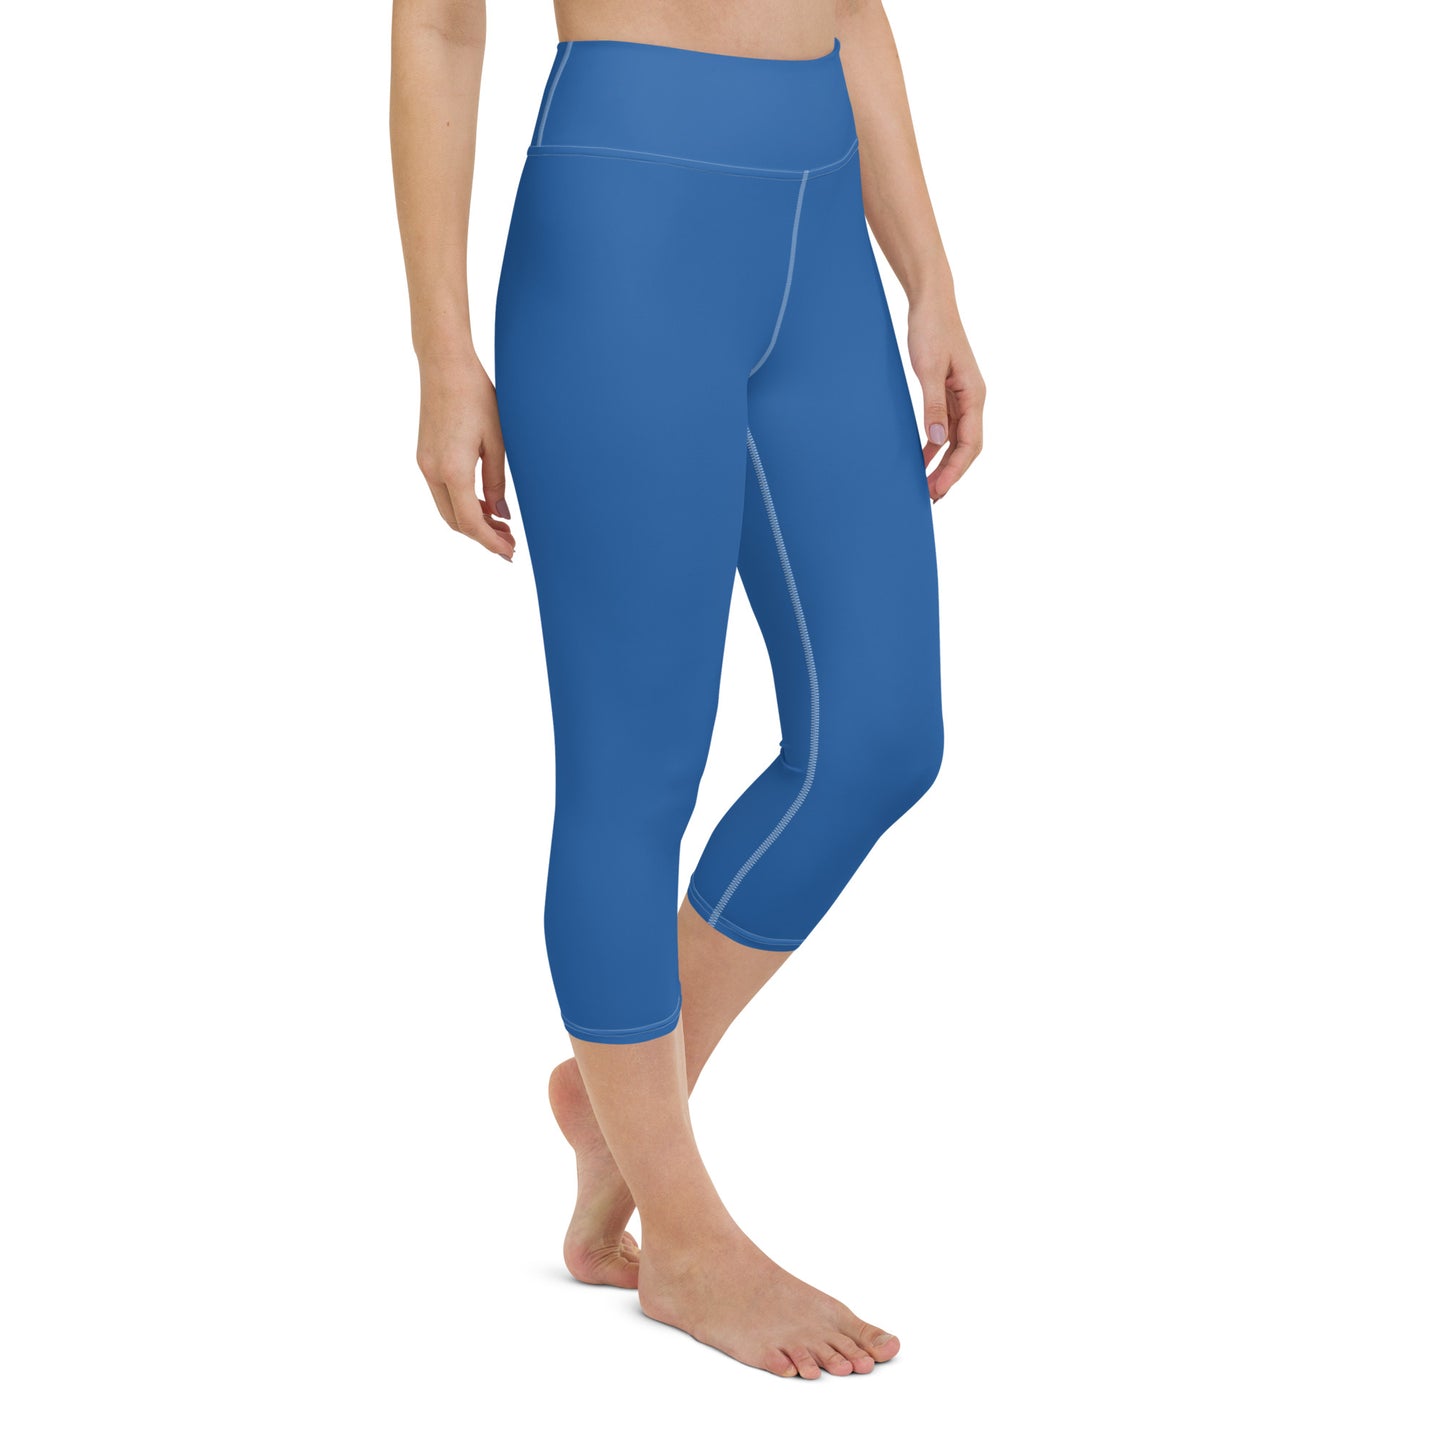 Alpen Tag Solid Blue Capri High Waist Yoga Leggings / Pants with Inside Pocket